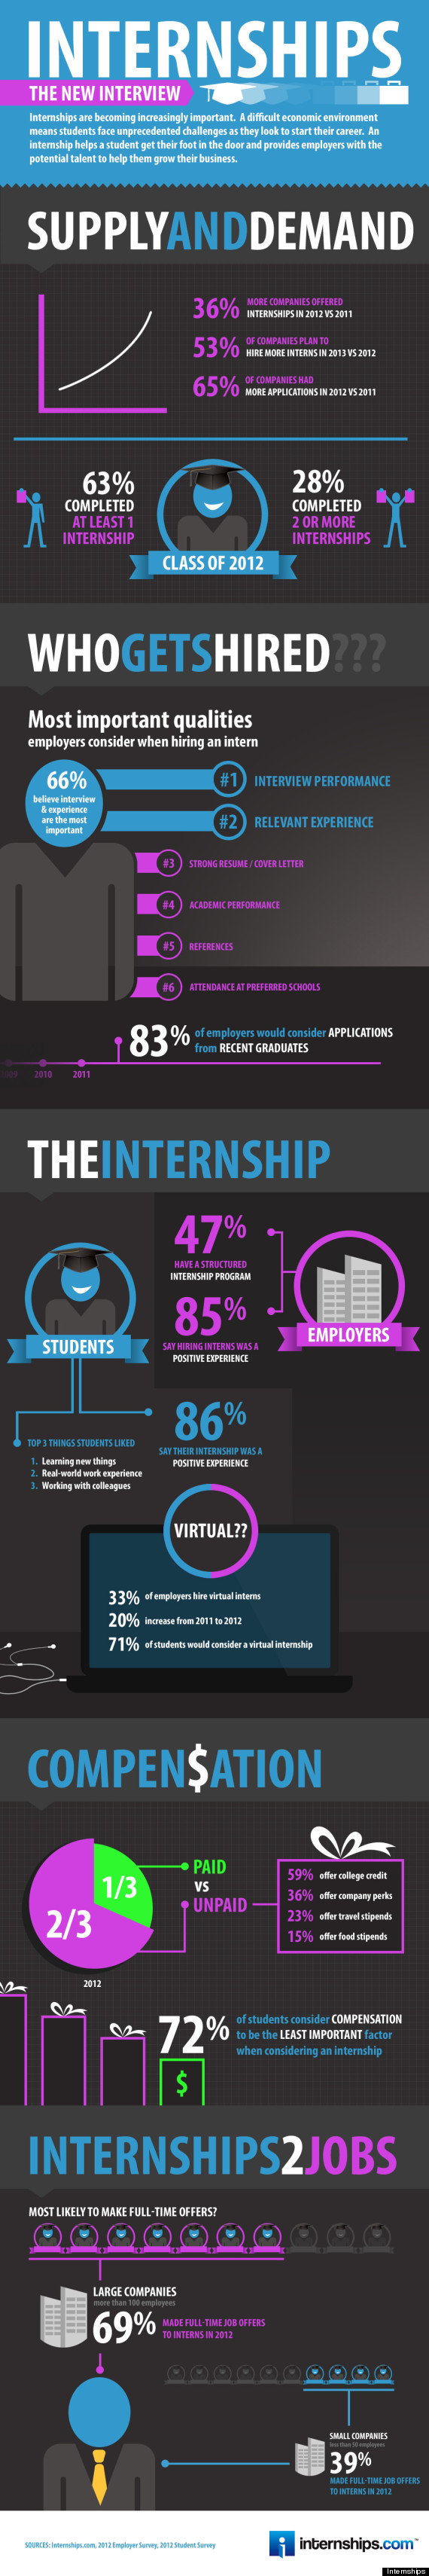 internships infographic